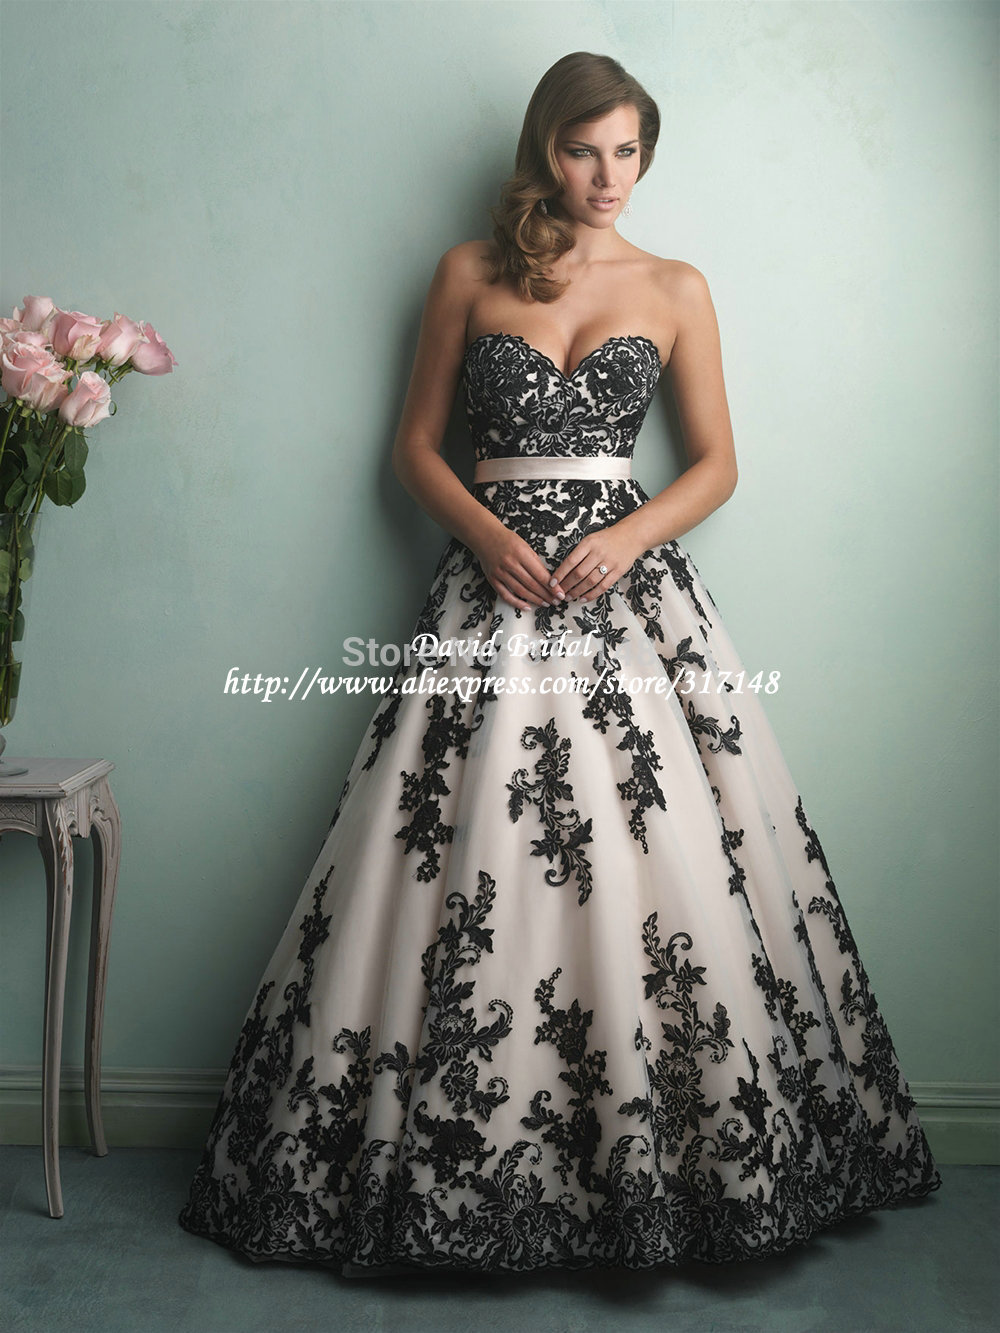 Black bridesmaid dresses 2015